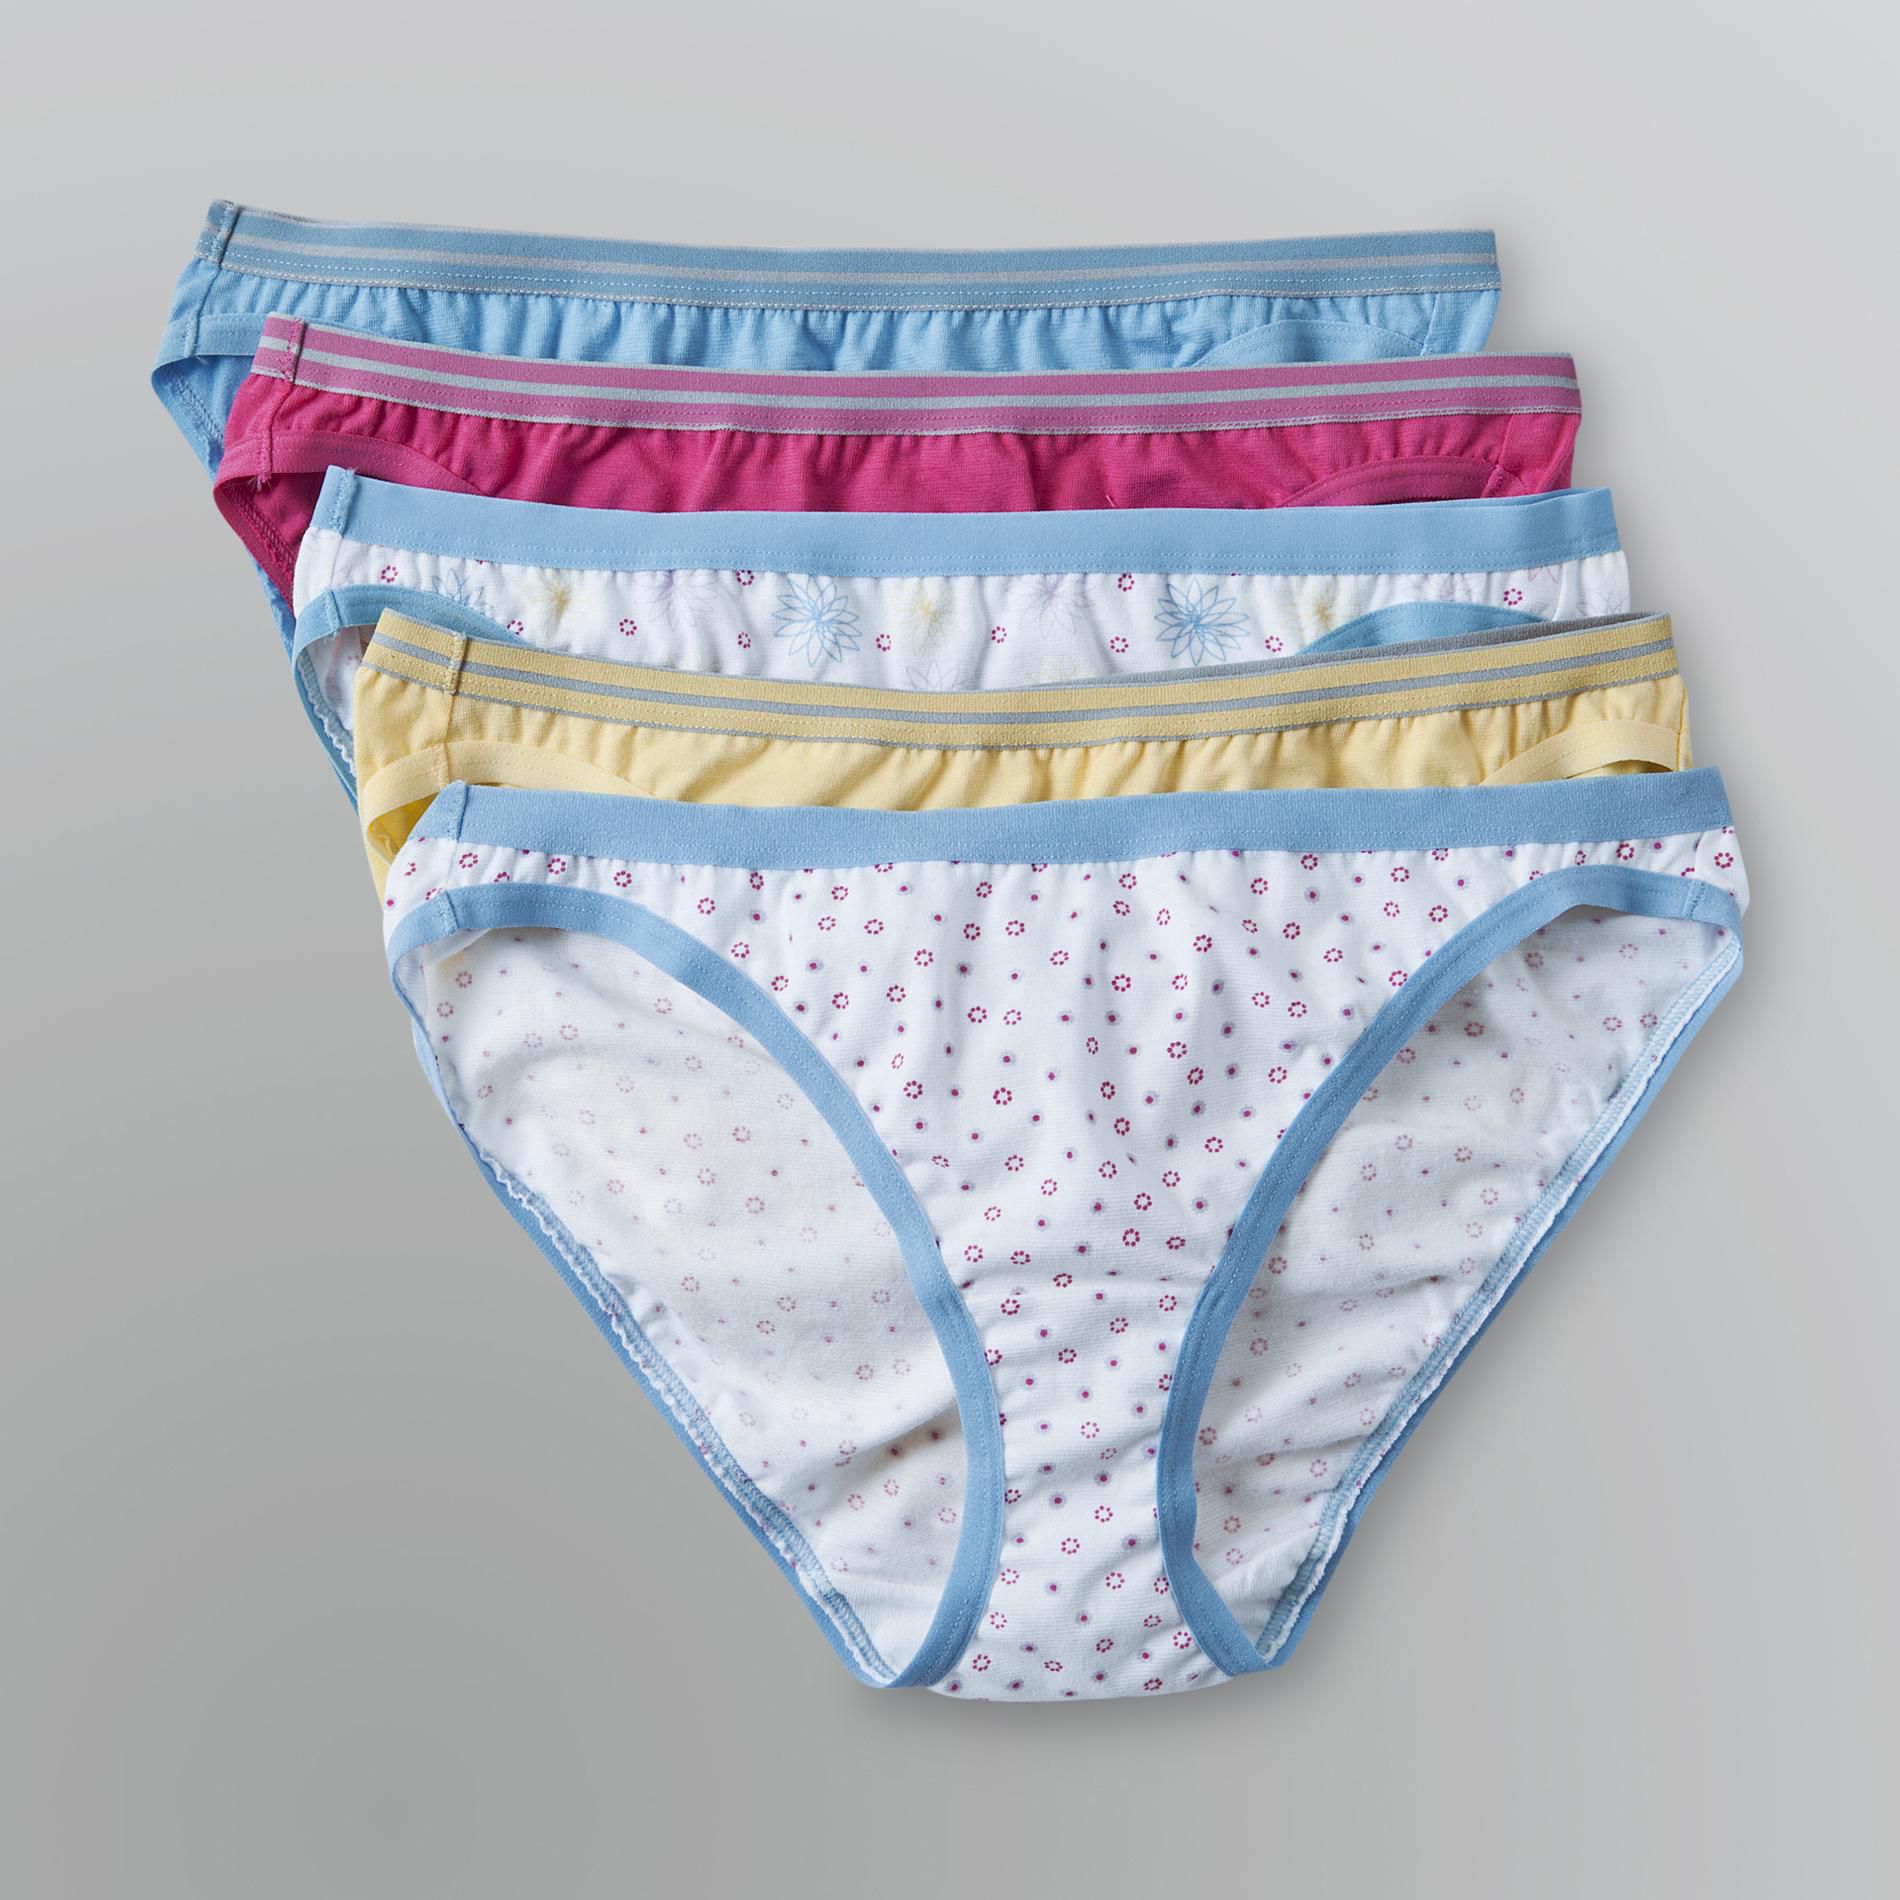 Vanity Fair Women's True Comfort Cotton Bikini Panty - 5-Pack